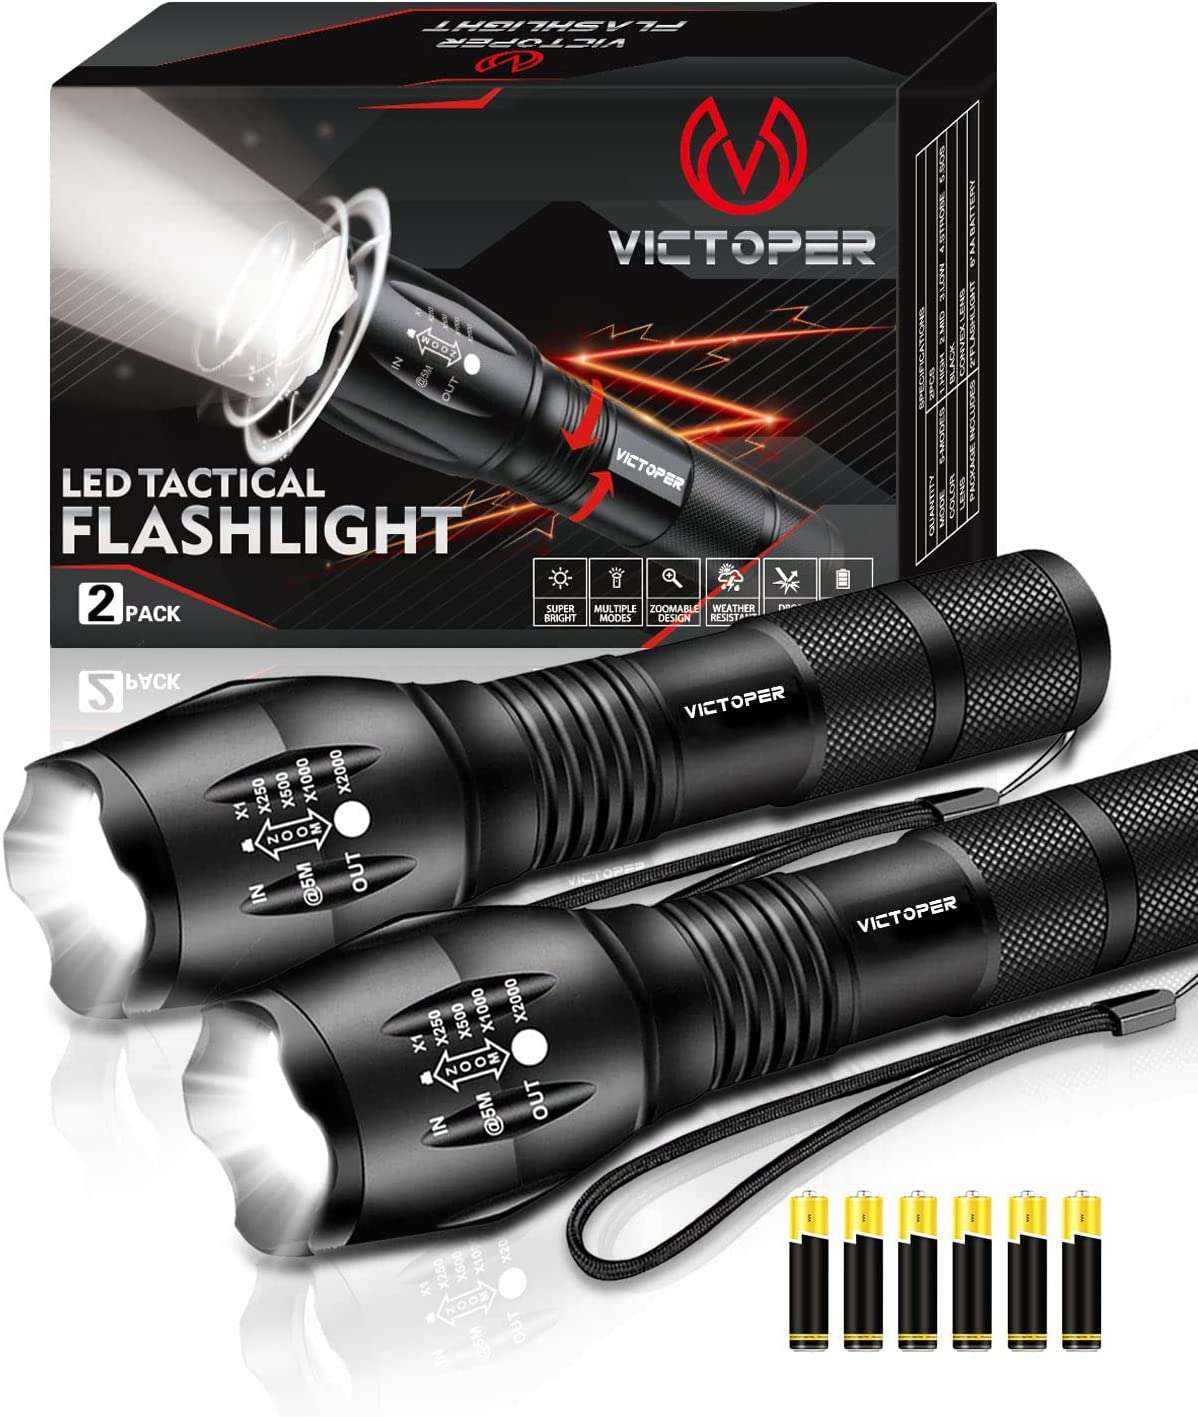 Victoper LED Flashlight 2 Pack...